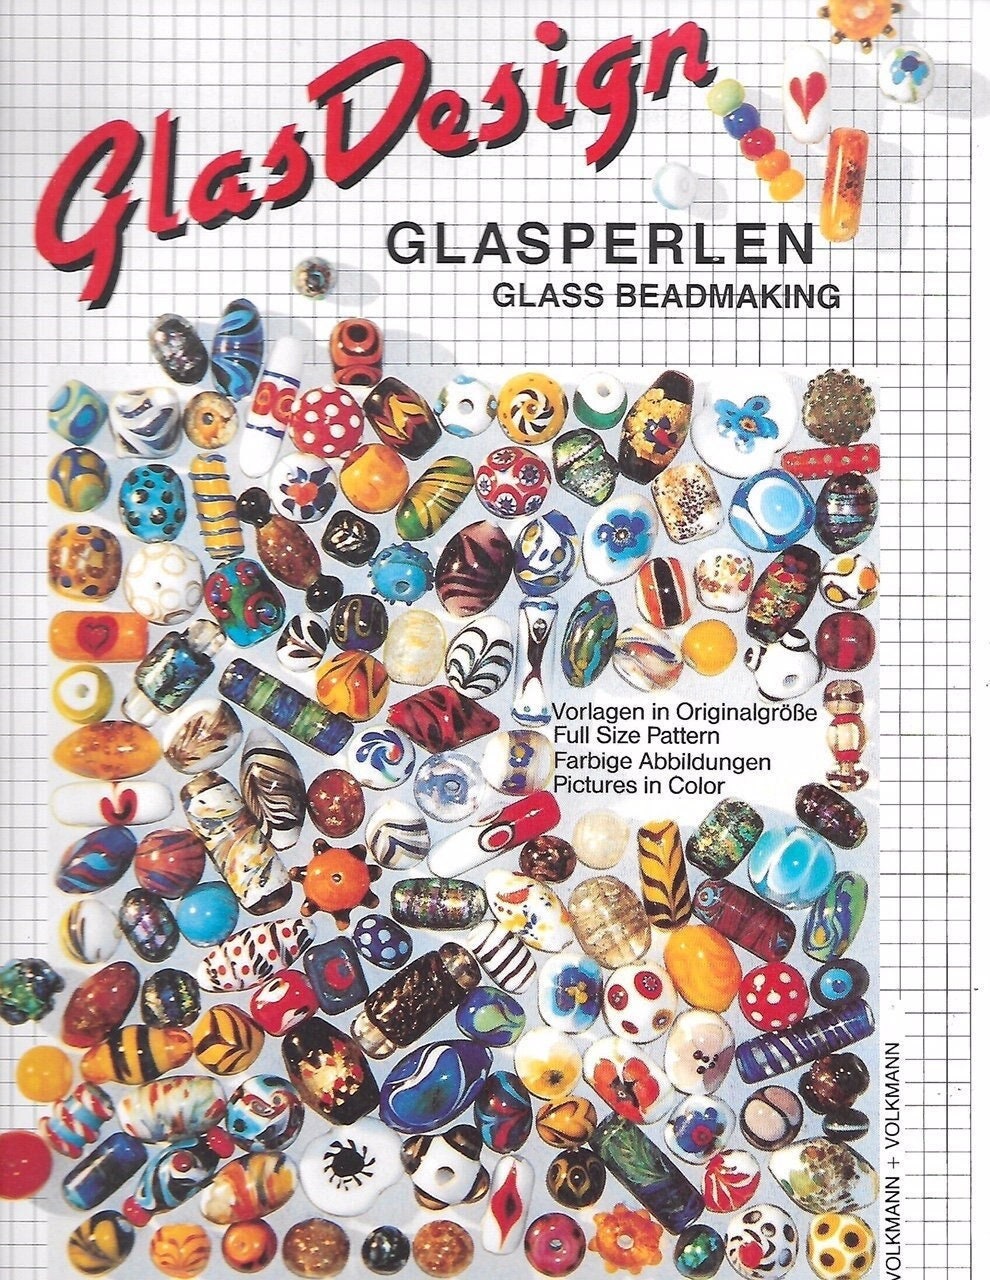 instructeur Refrein Fantasierijk 1996 OOP Glasdesign 'glass Beadmaking' Pattern Book - Etsy